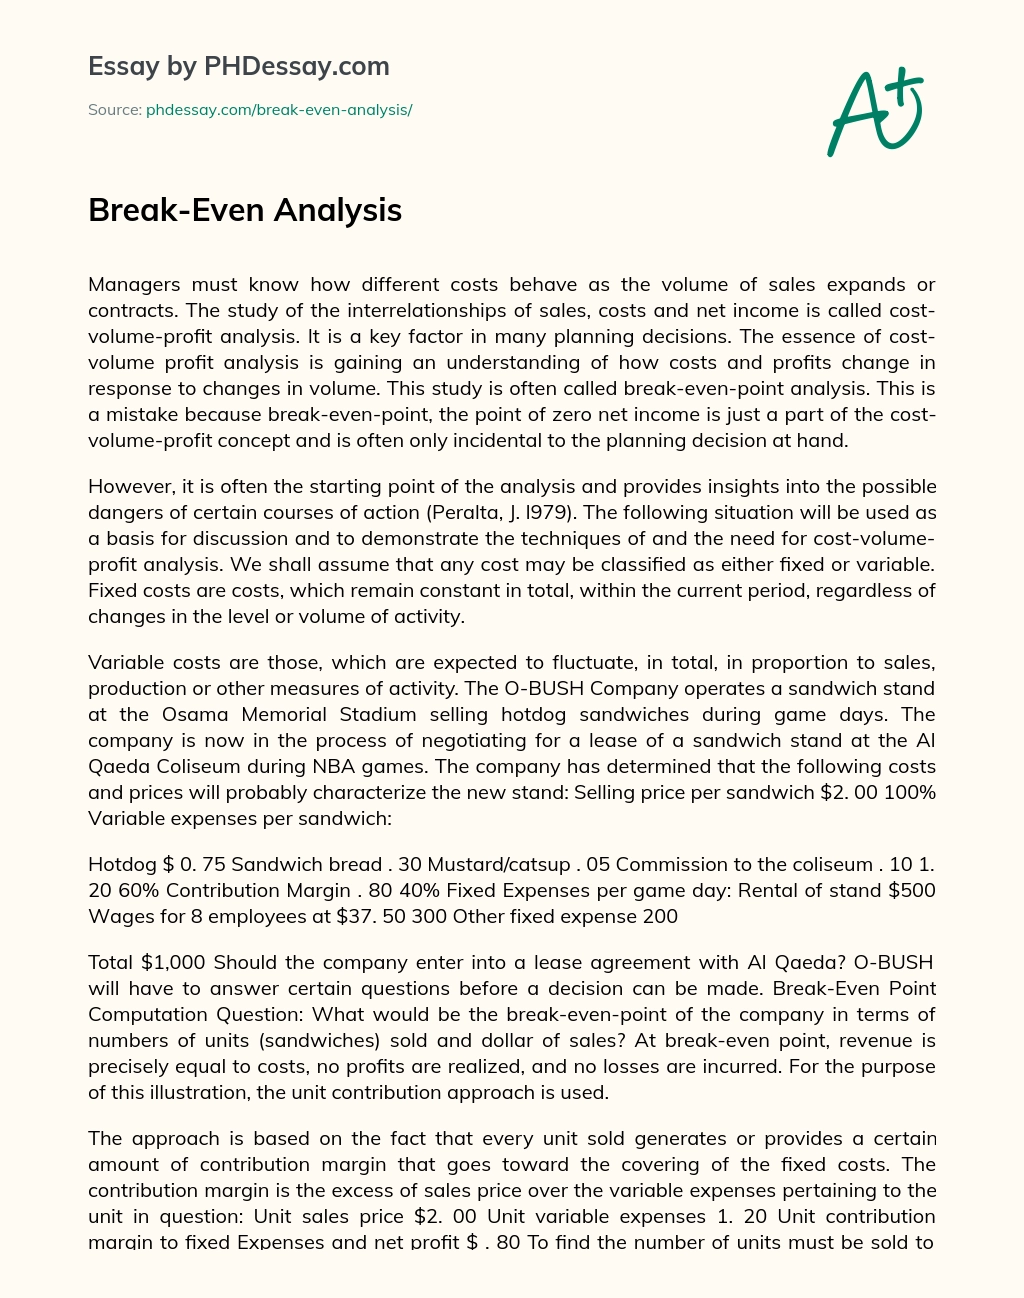 Break-Even Analysis essay